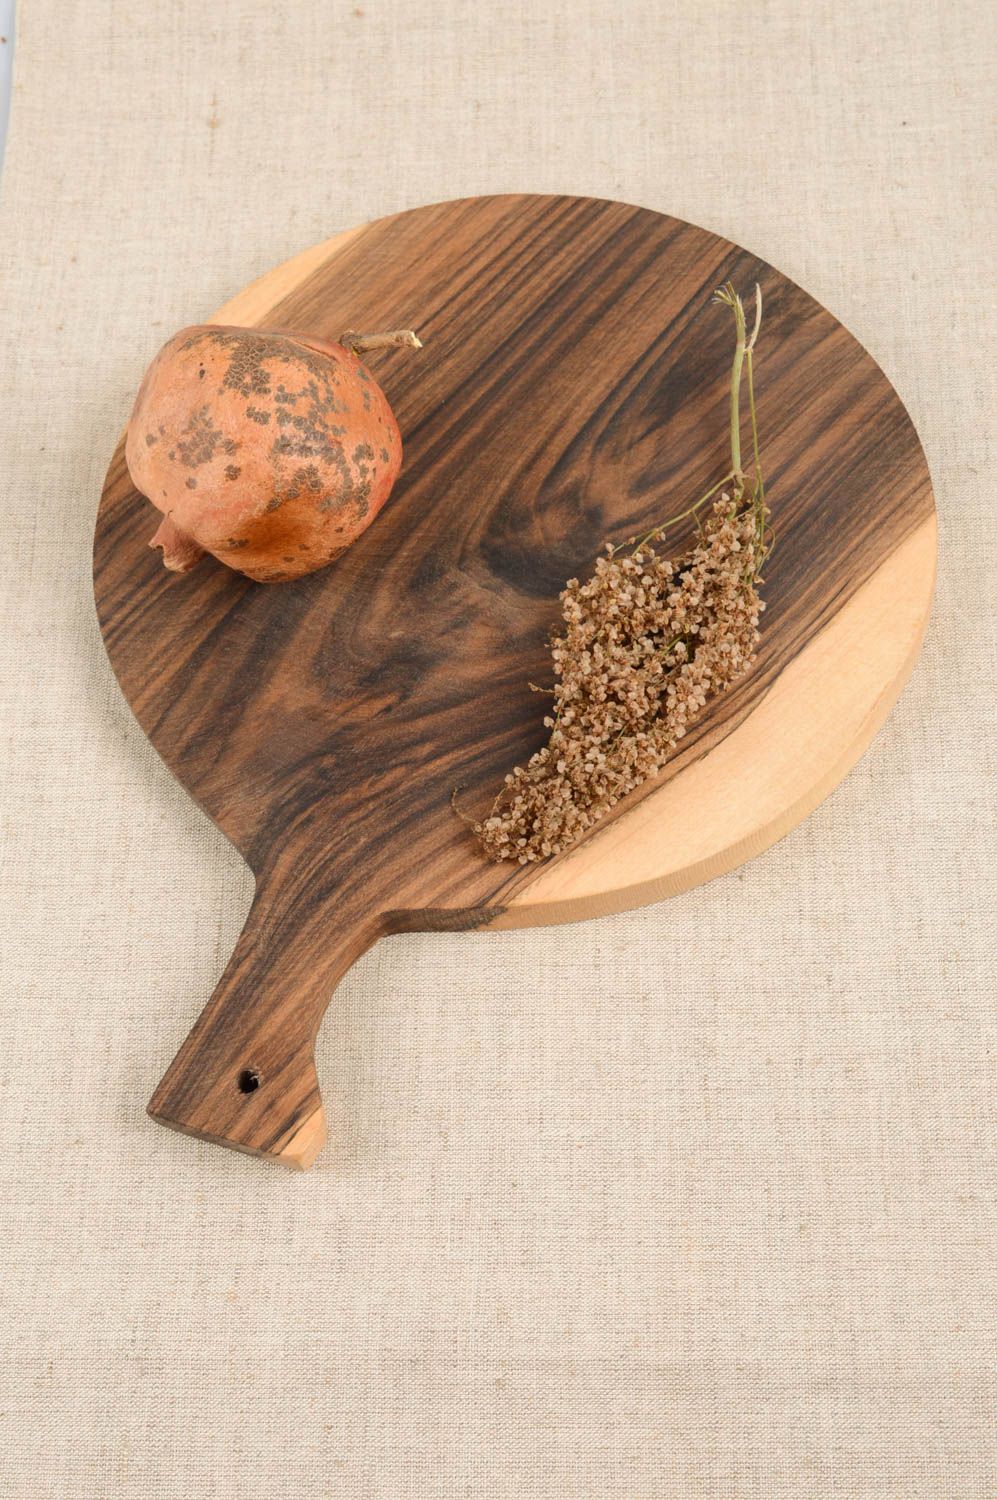 Handmade cutting board wooden chopping board kitchen decor wooden utensils photo 1